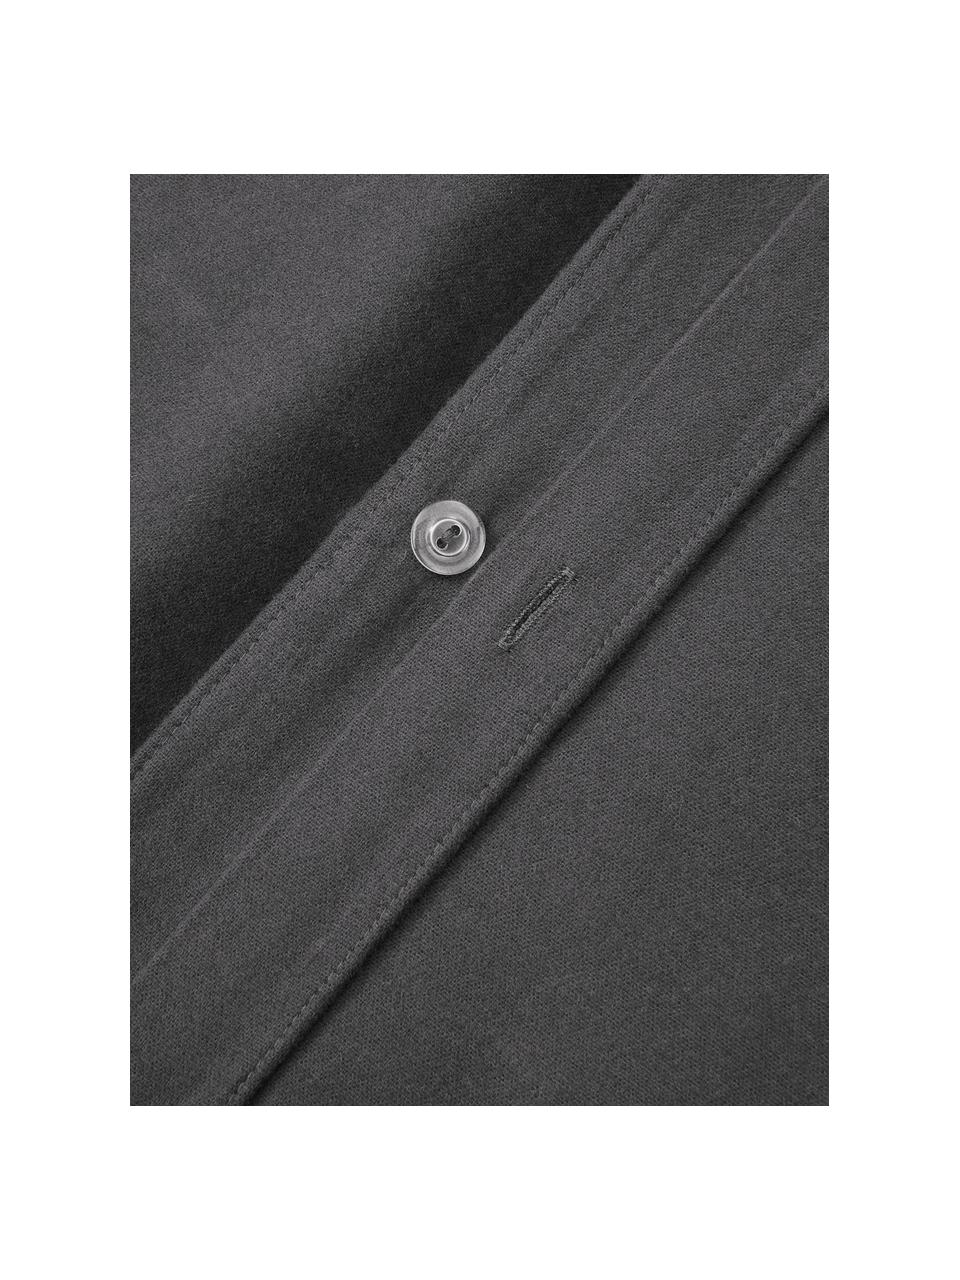 Flanell-Kopfkissenbezug Biba aus Baumwolle in Grau, Webart: Flanell Flanell ist ein k, Grau, B 40 x L 80 cm